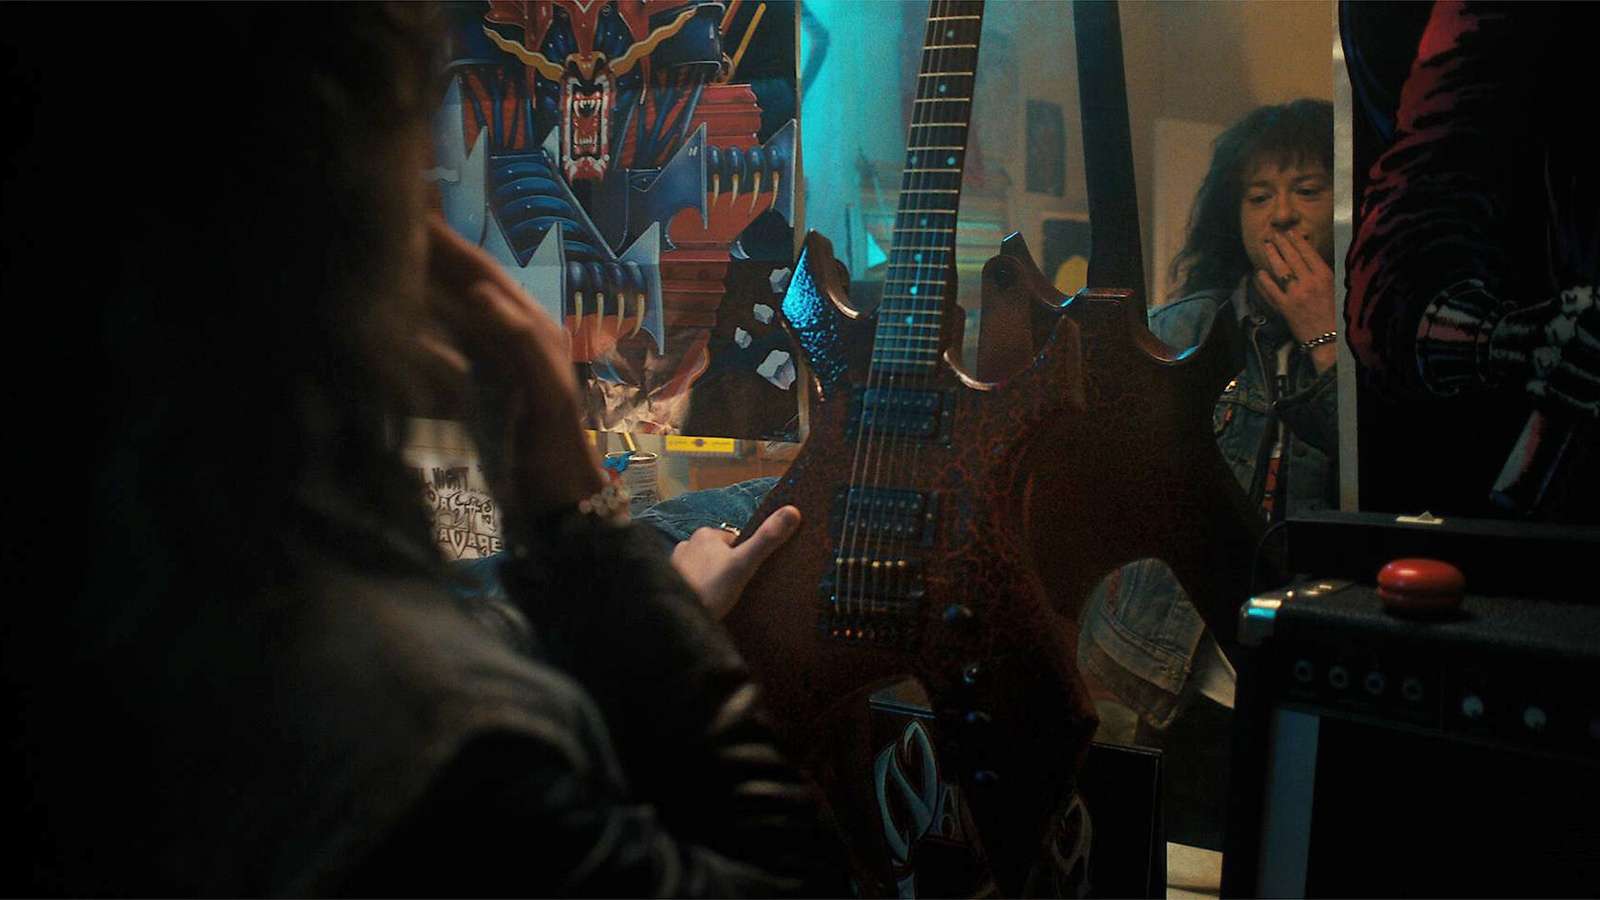 Eddie Munson's Nj Warlock guitar in Stranger Things Season 4